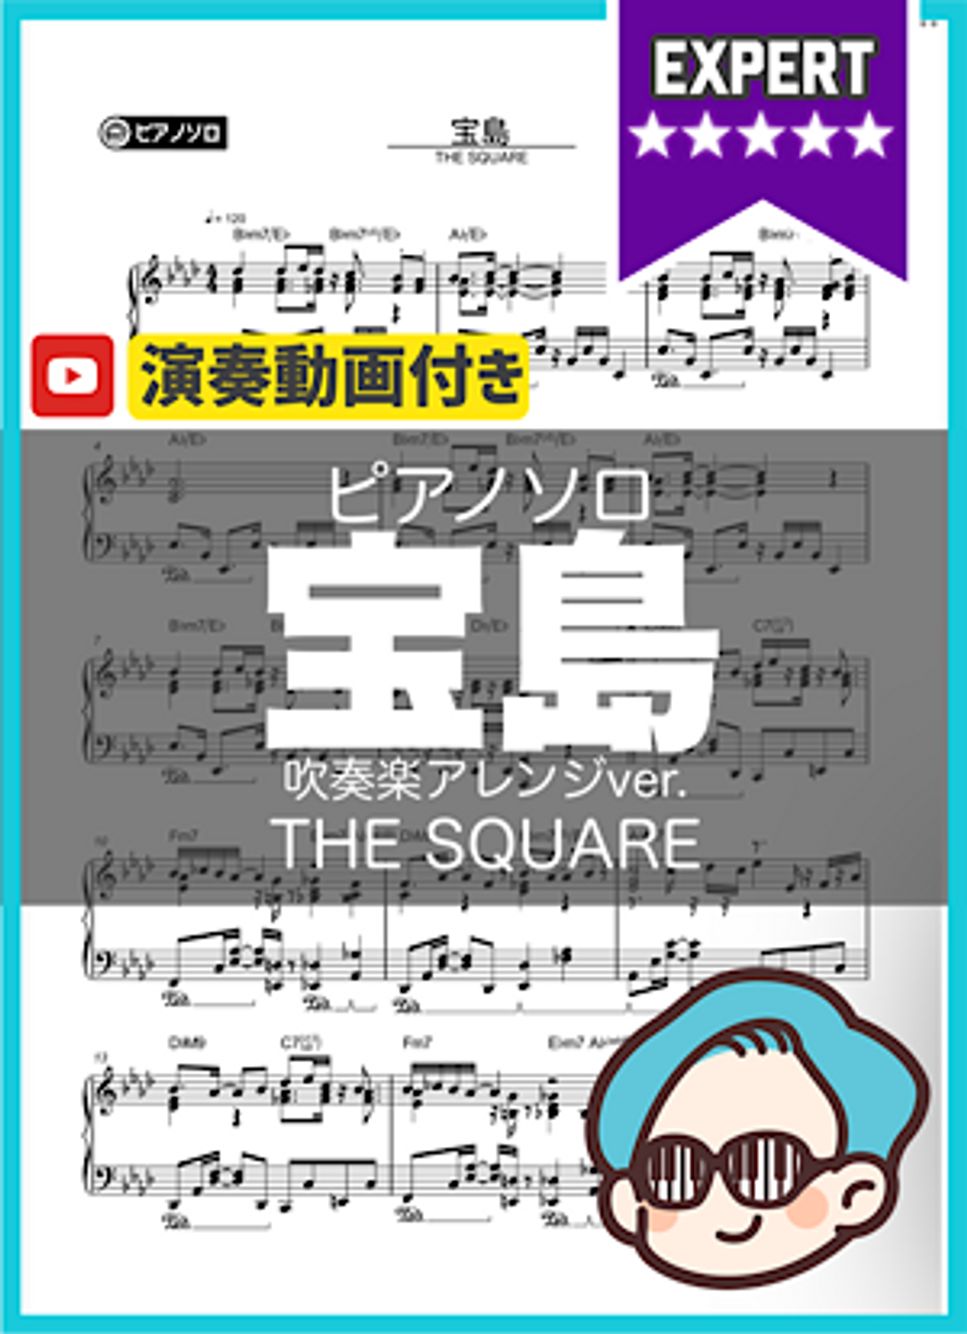 THE SQUARE - 宝島 by シータピアノ